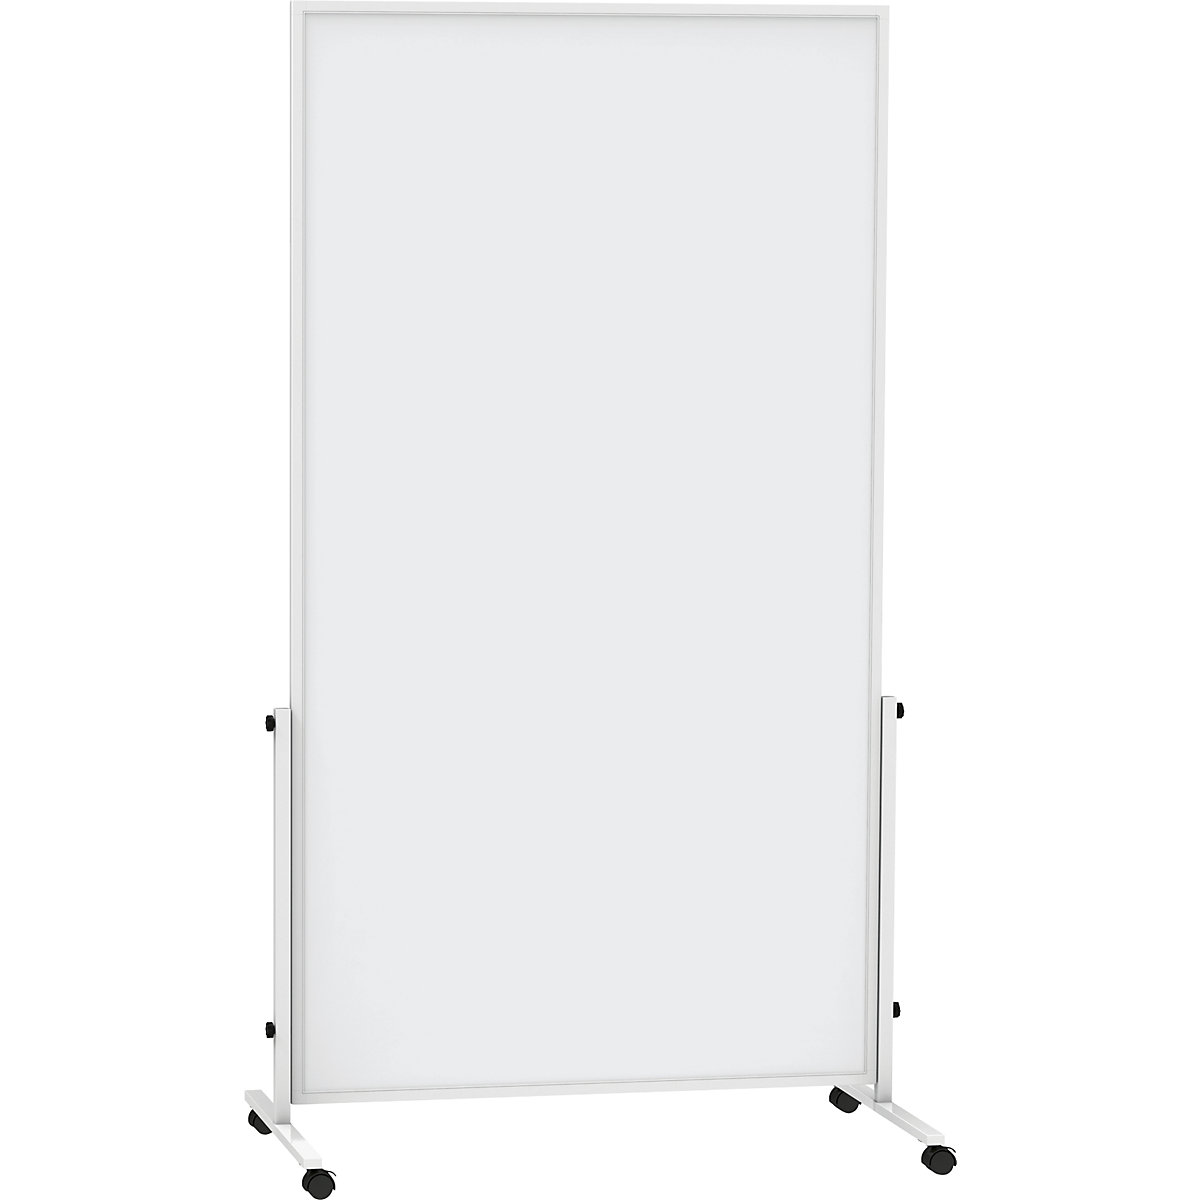 Biela tabuľa MAUL®solid easy2move, mobilná – MAUL, v x š 1965 x 640 mm, biela, tabuľa v x š 1800 x 1000 mm-2